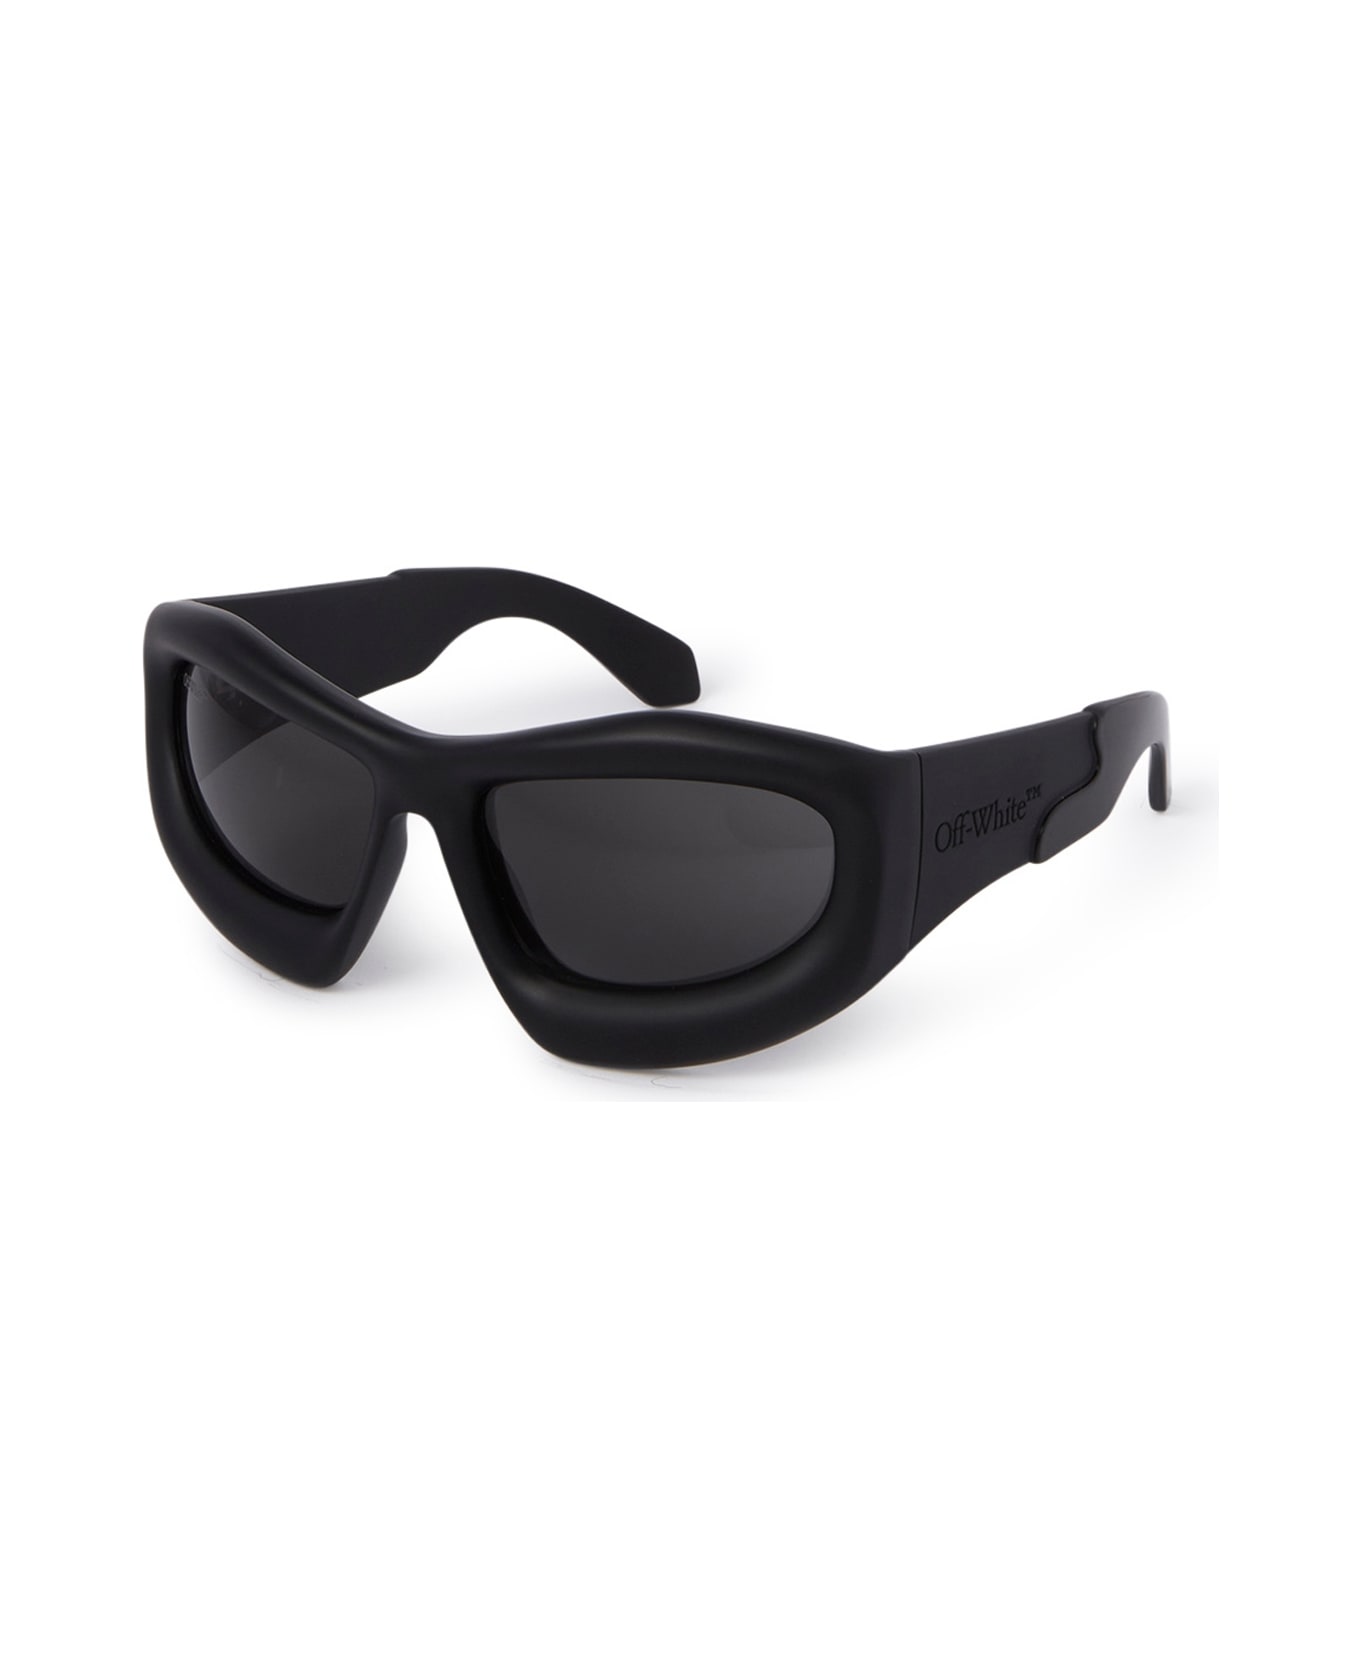 Off-White Katoka Sunglasses - Nero サングラス